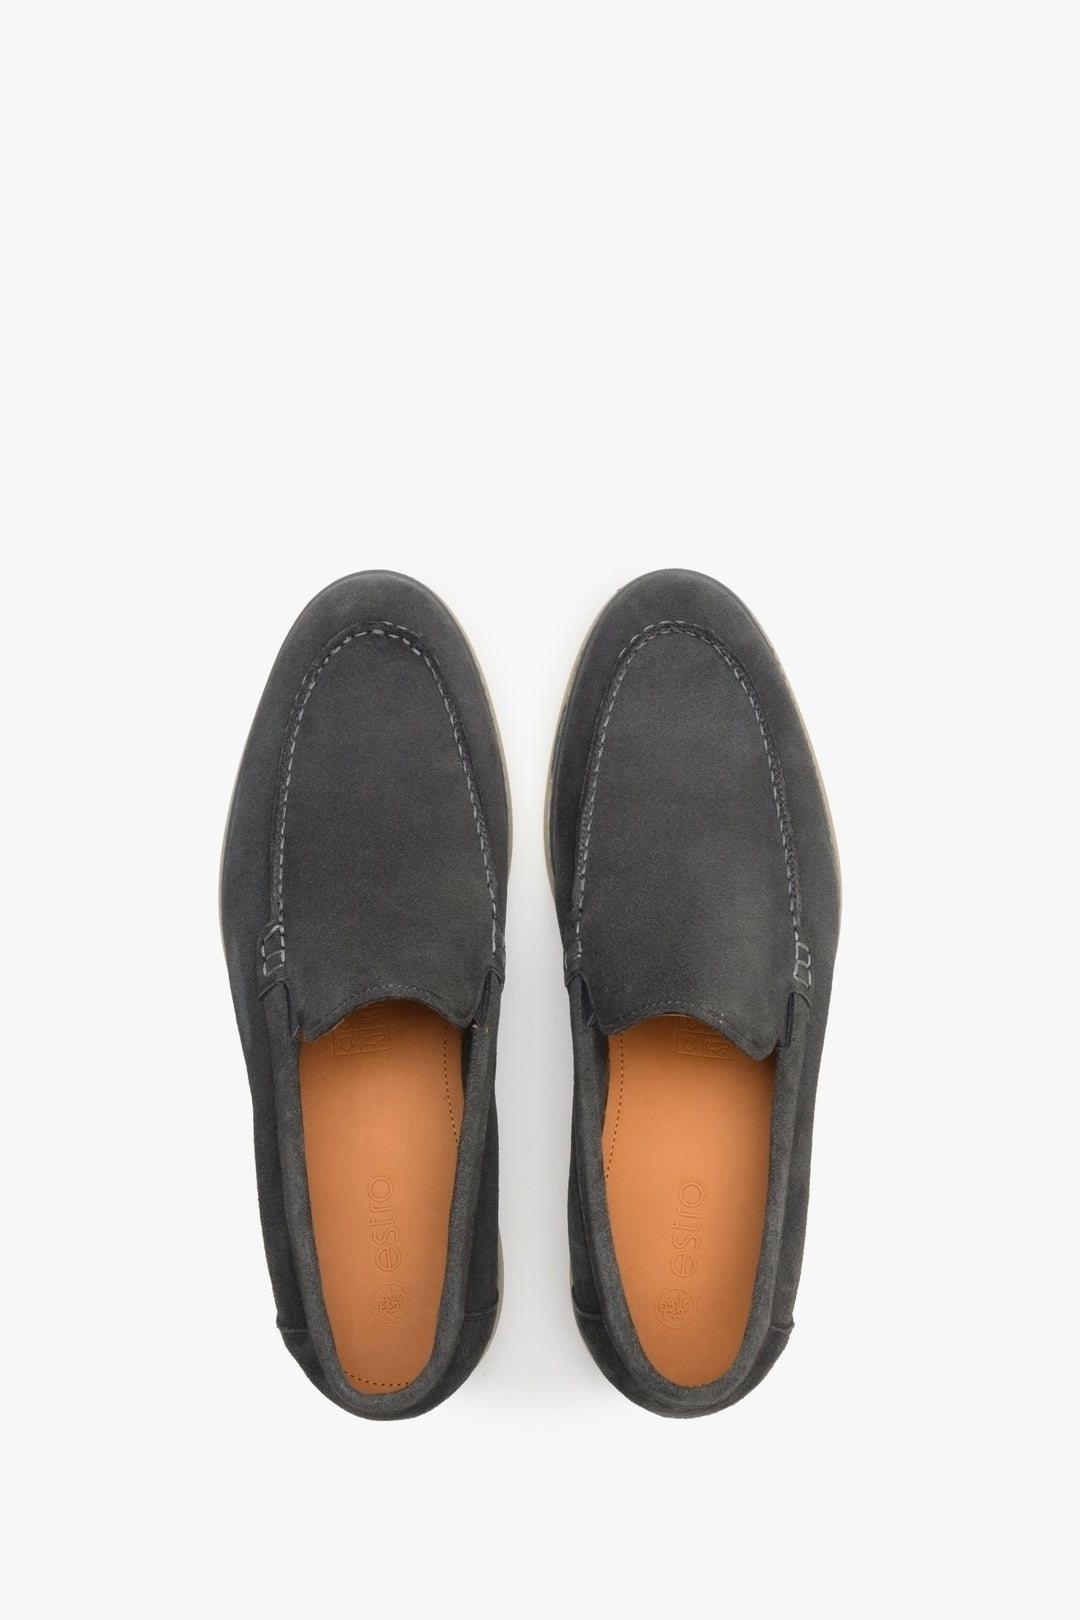 Estro men's grey velour loafers - top view shoe presentation.